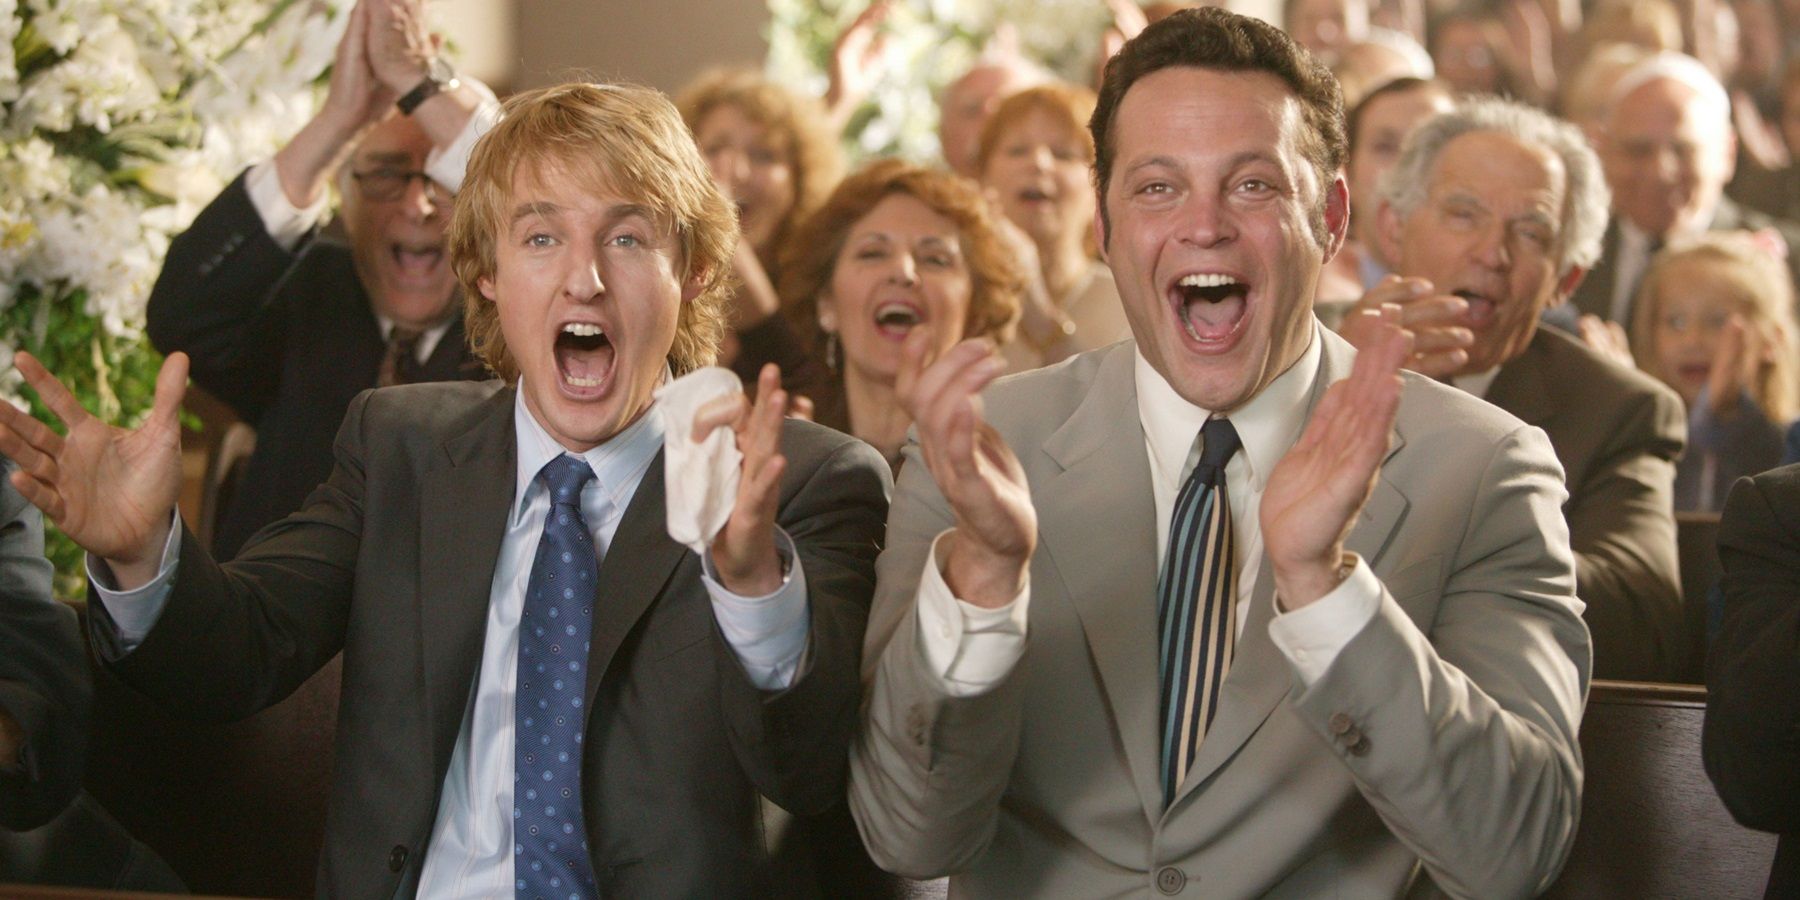 Vince Vaughn and Owen Wilson at a wedding in Wedding Crashers